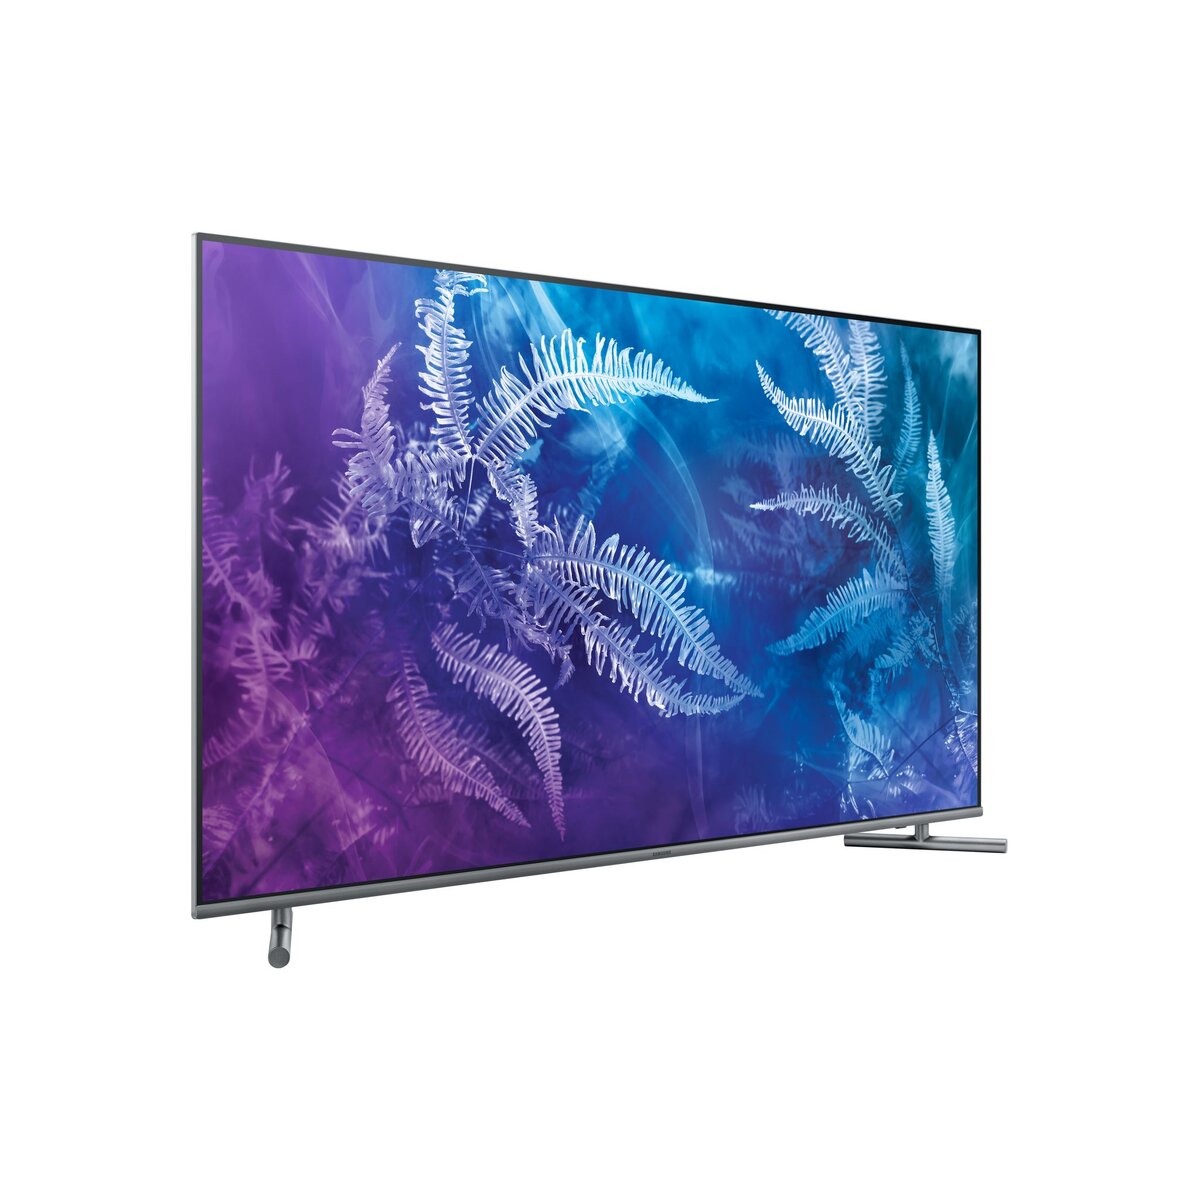 SAMSUNG QE55Q6F 2017 TV QLED 4K UHD 138 cm Smart TV Finition Métal